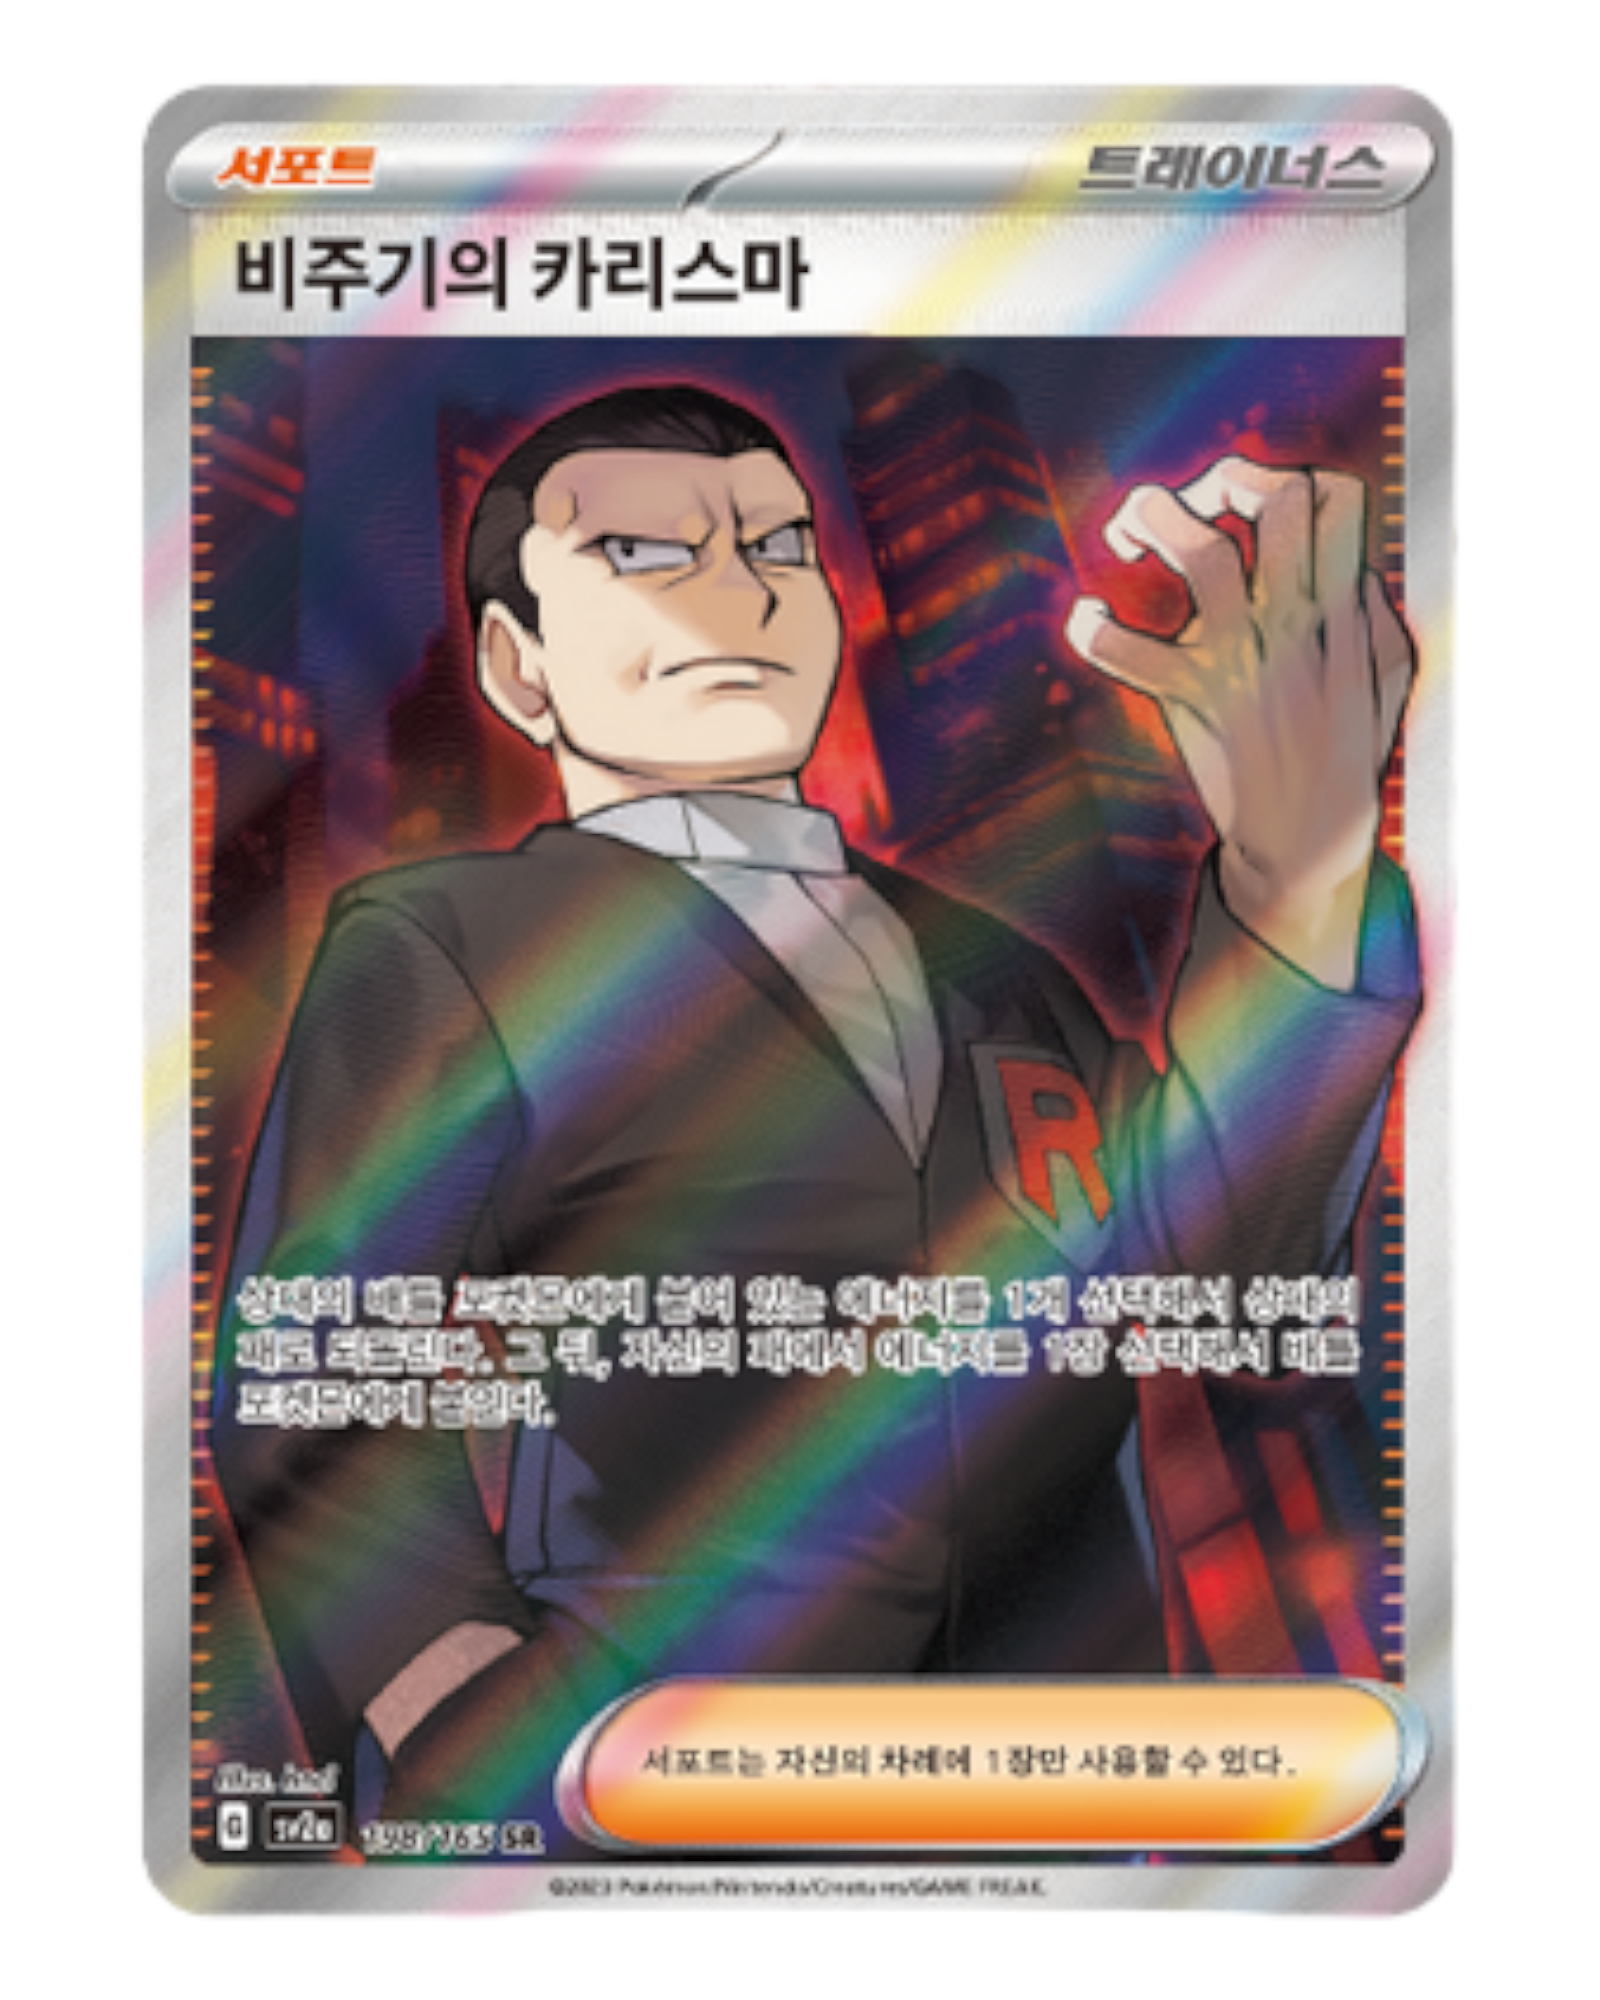 Scarlet & Violet - Pokémon 151 Booster Box - sv2a (Korean